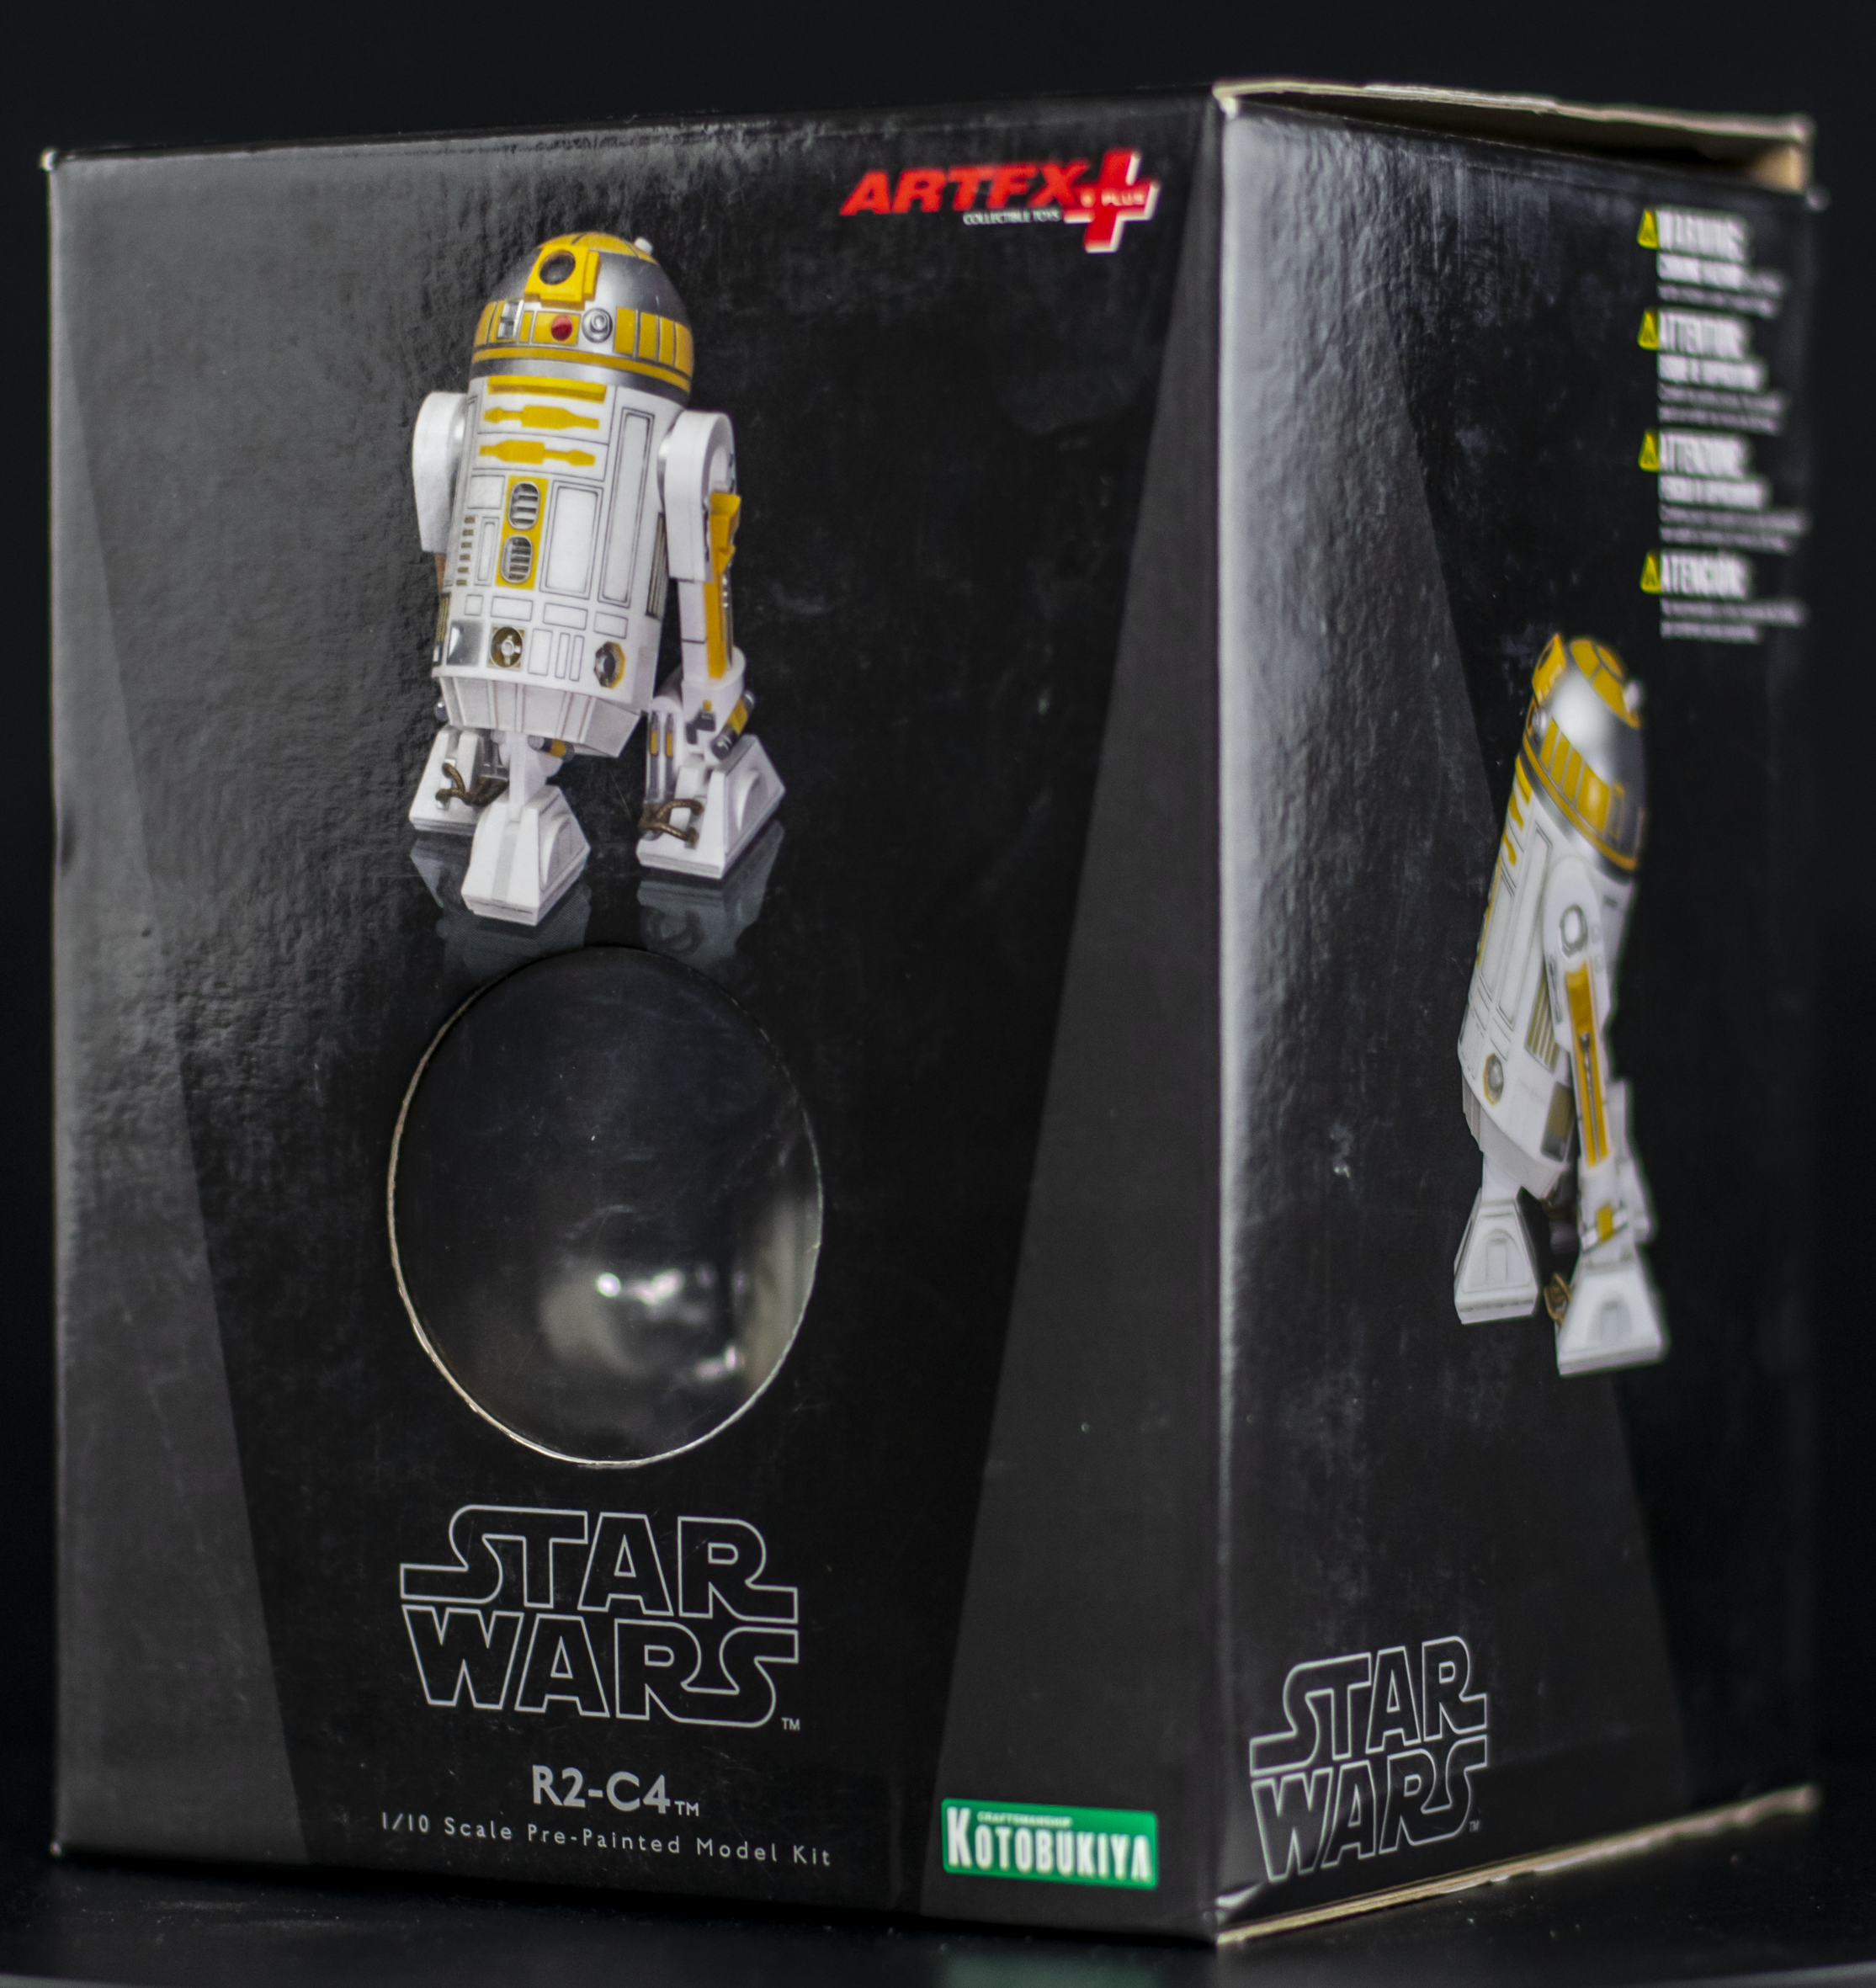 Star Wars: ArtFX "R2-C4" 1/10 Scale Pre-painted Model Kit